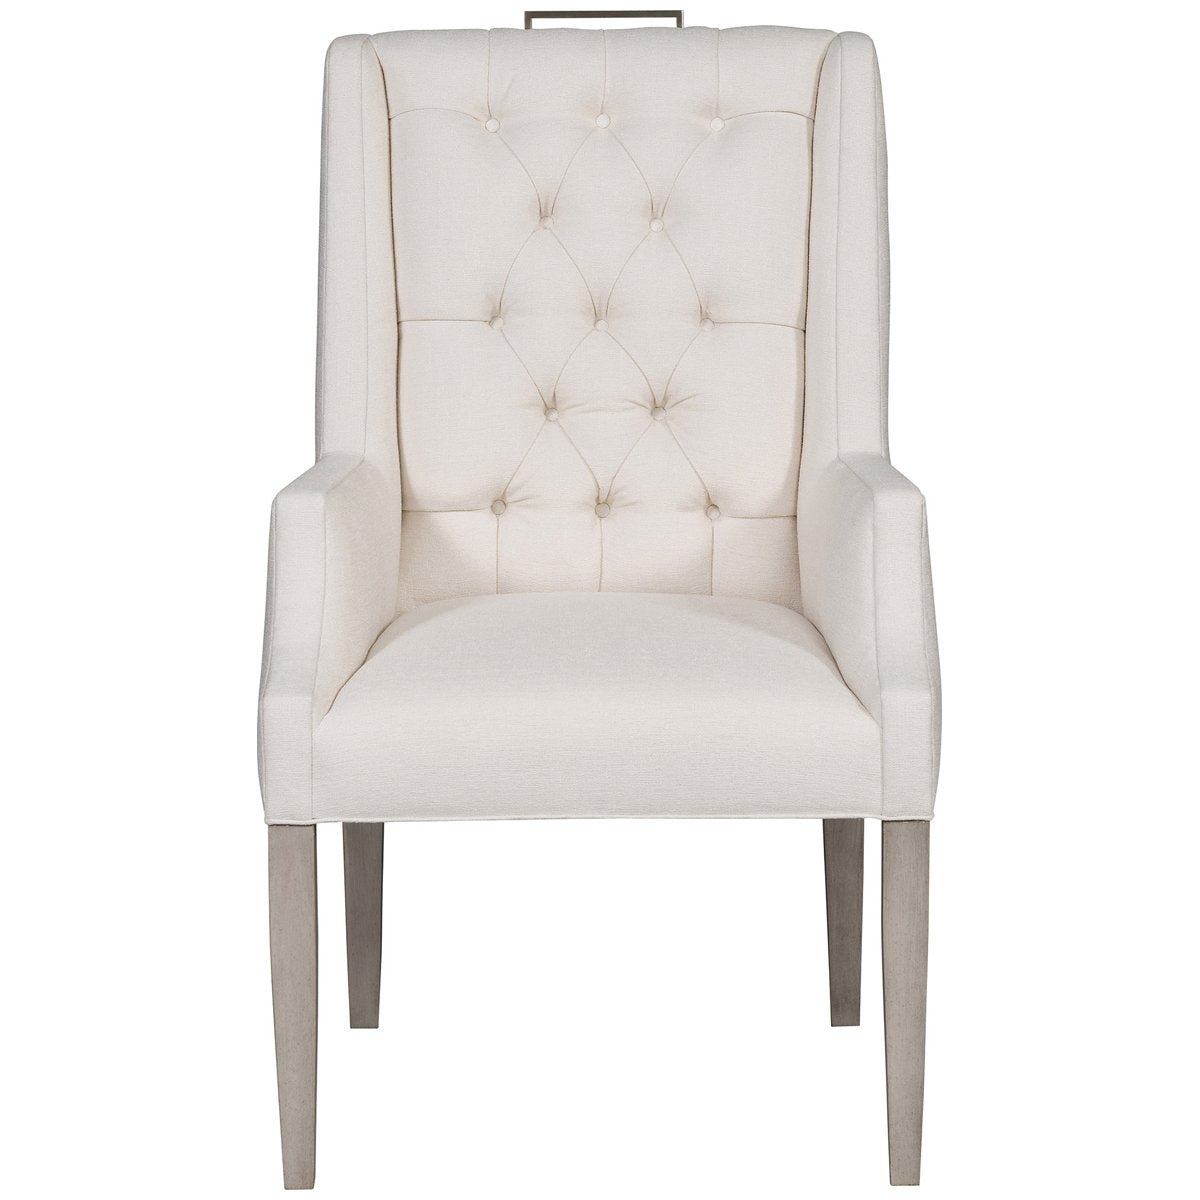 Vanguard Furniture Everhart Arm Chair